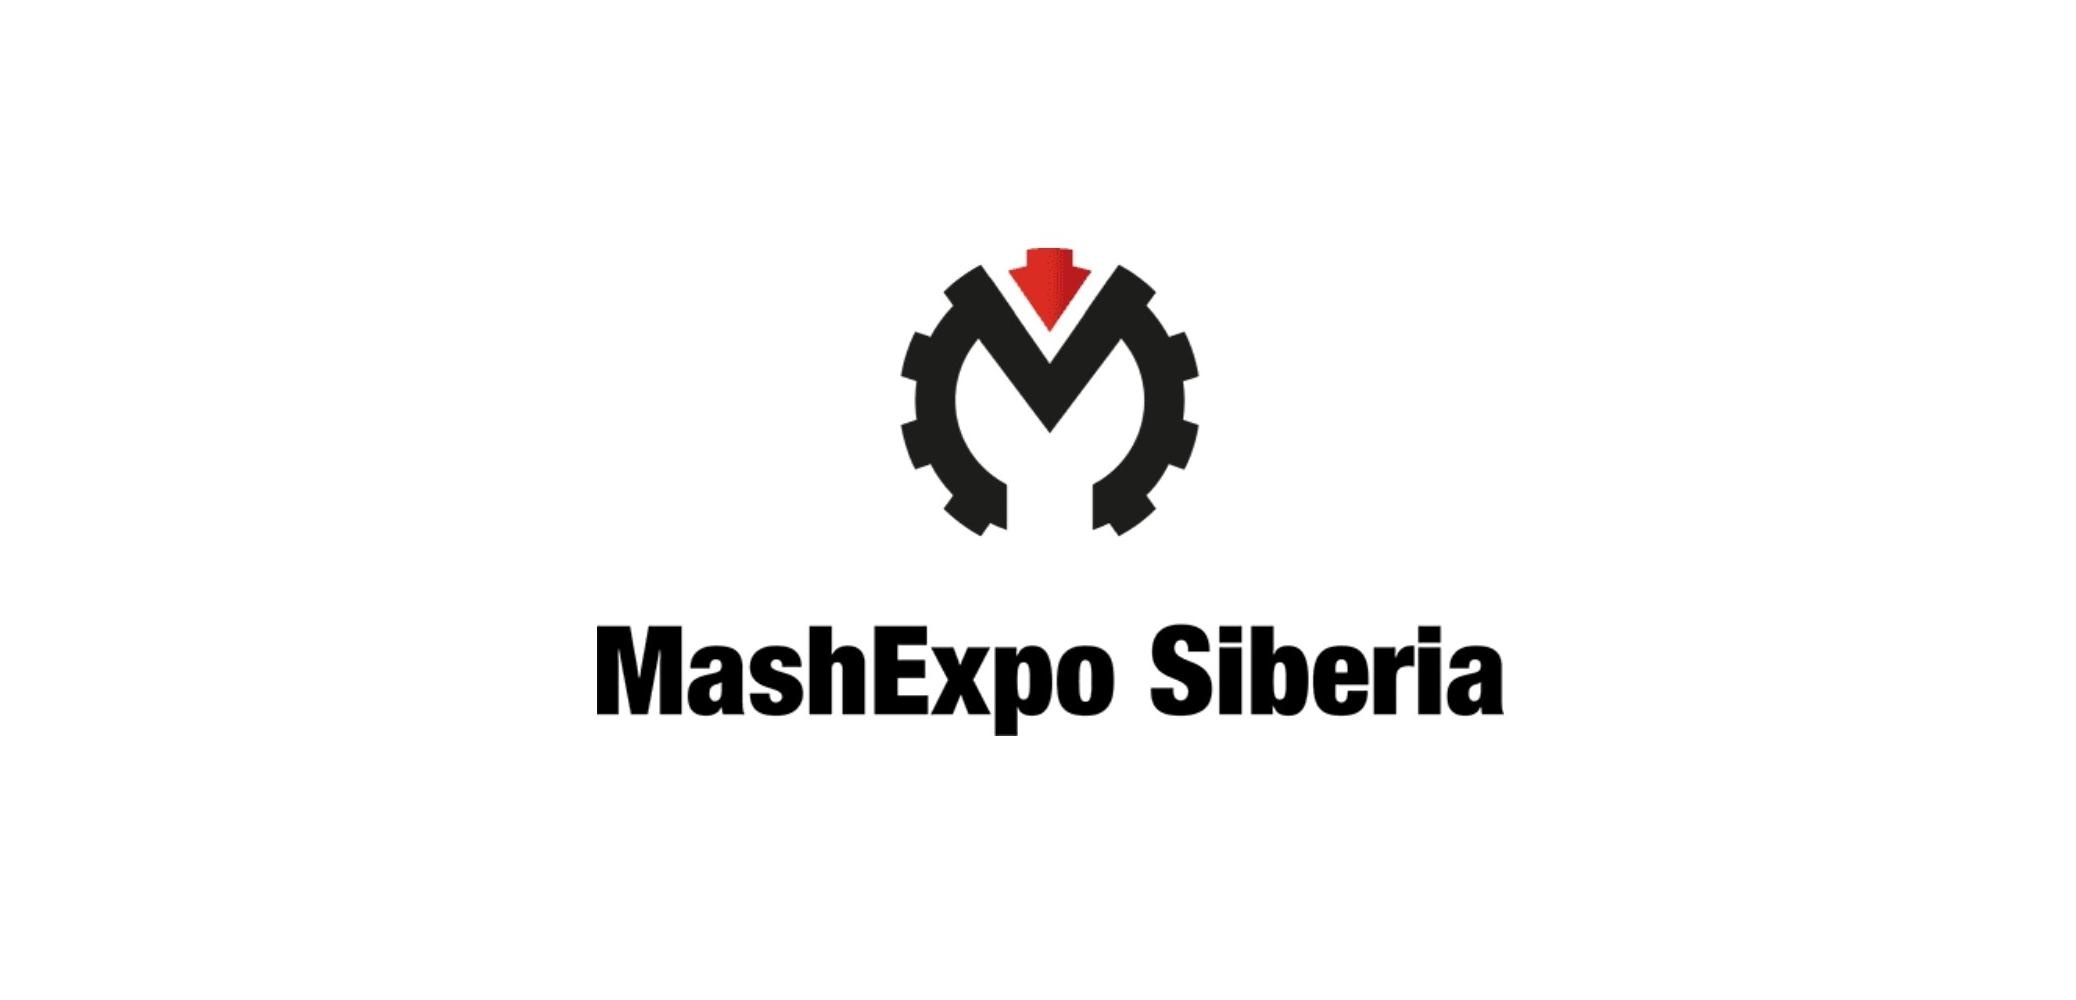 Выставка в Новосибирске MashExpo Siberia 2021